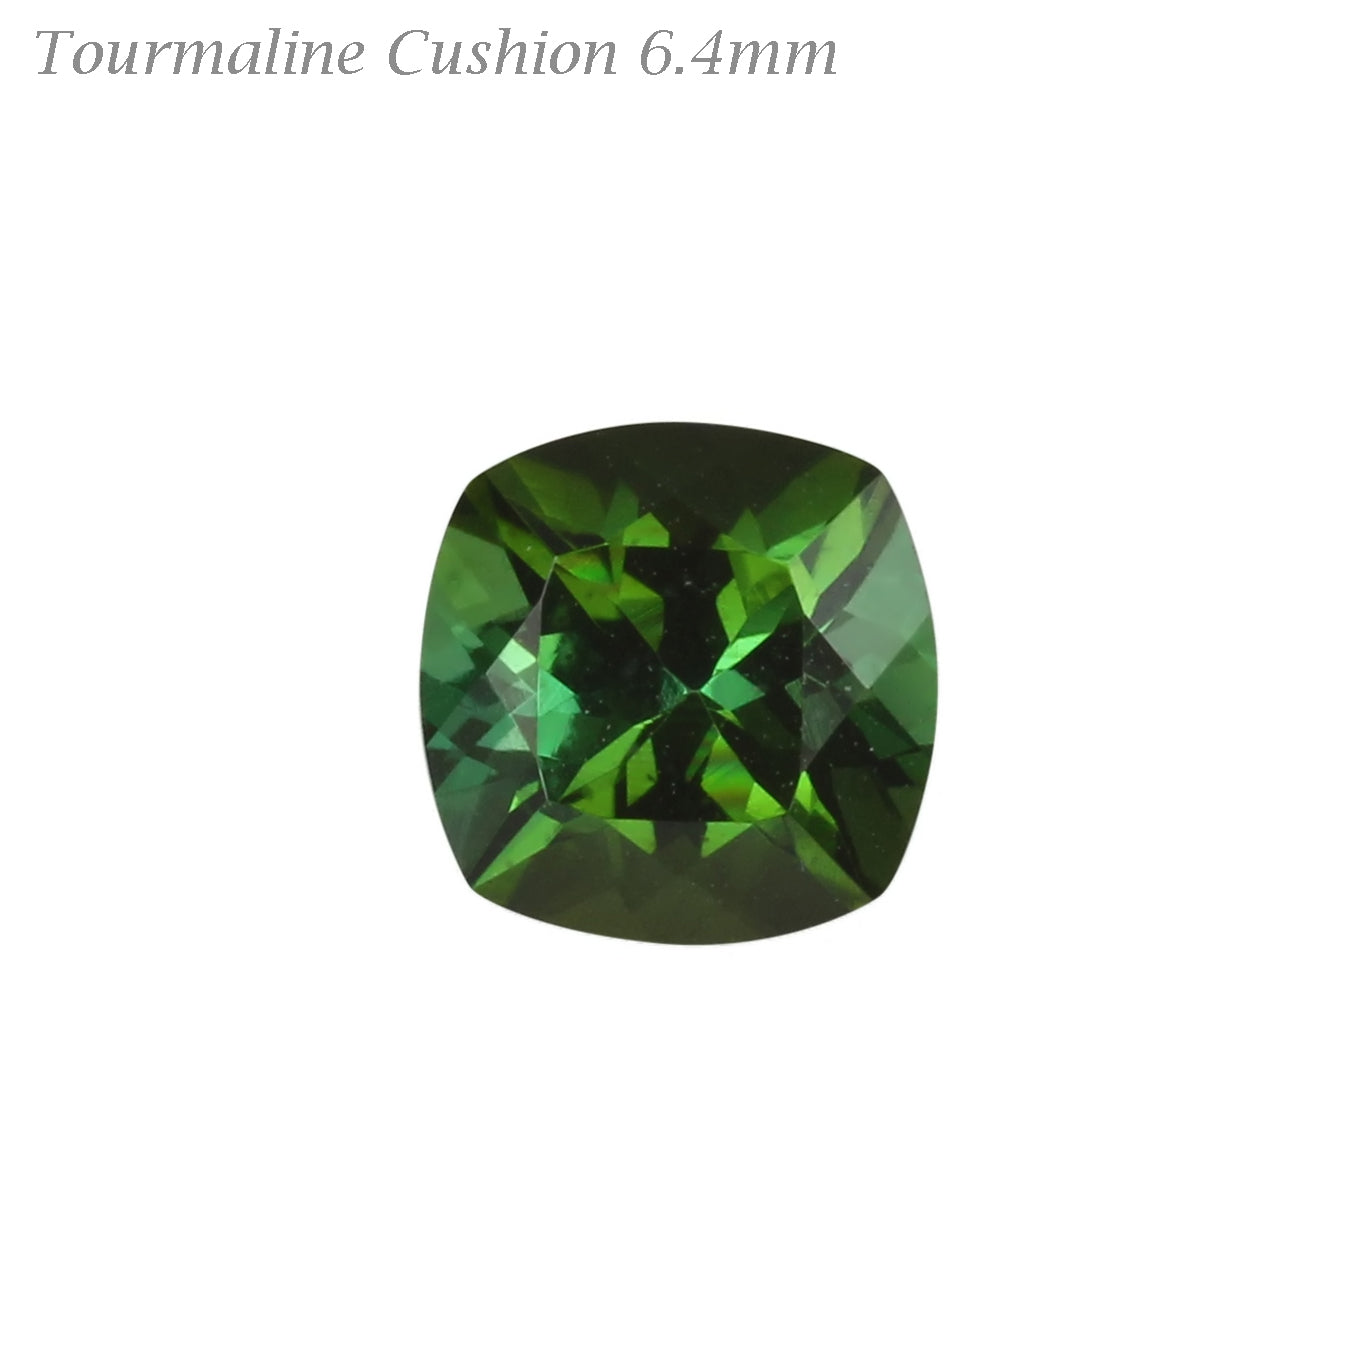 Mint Green Tourmaline